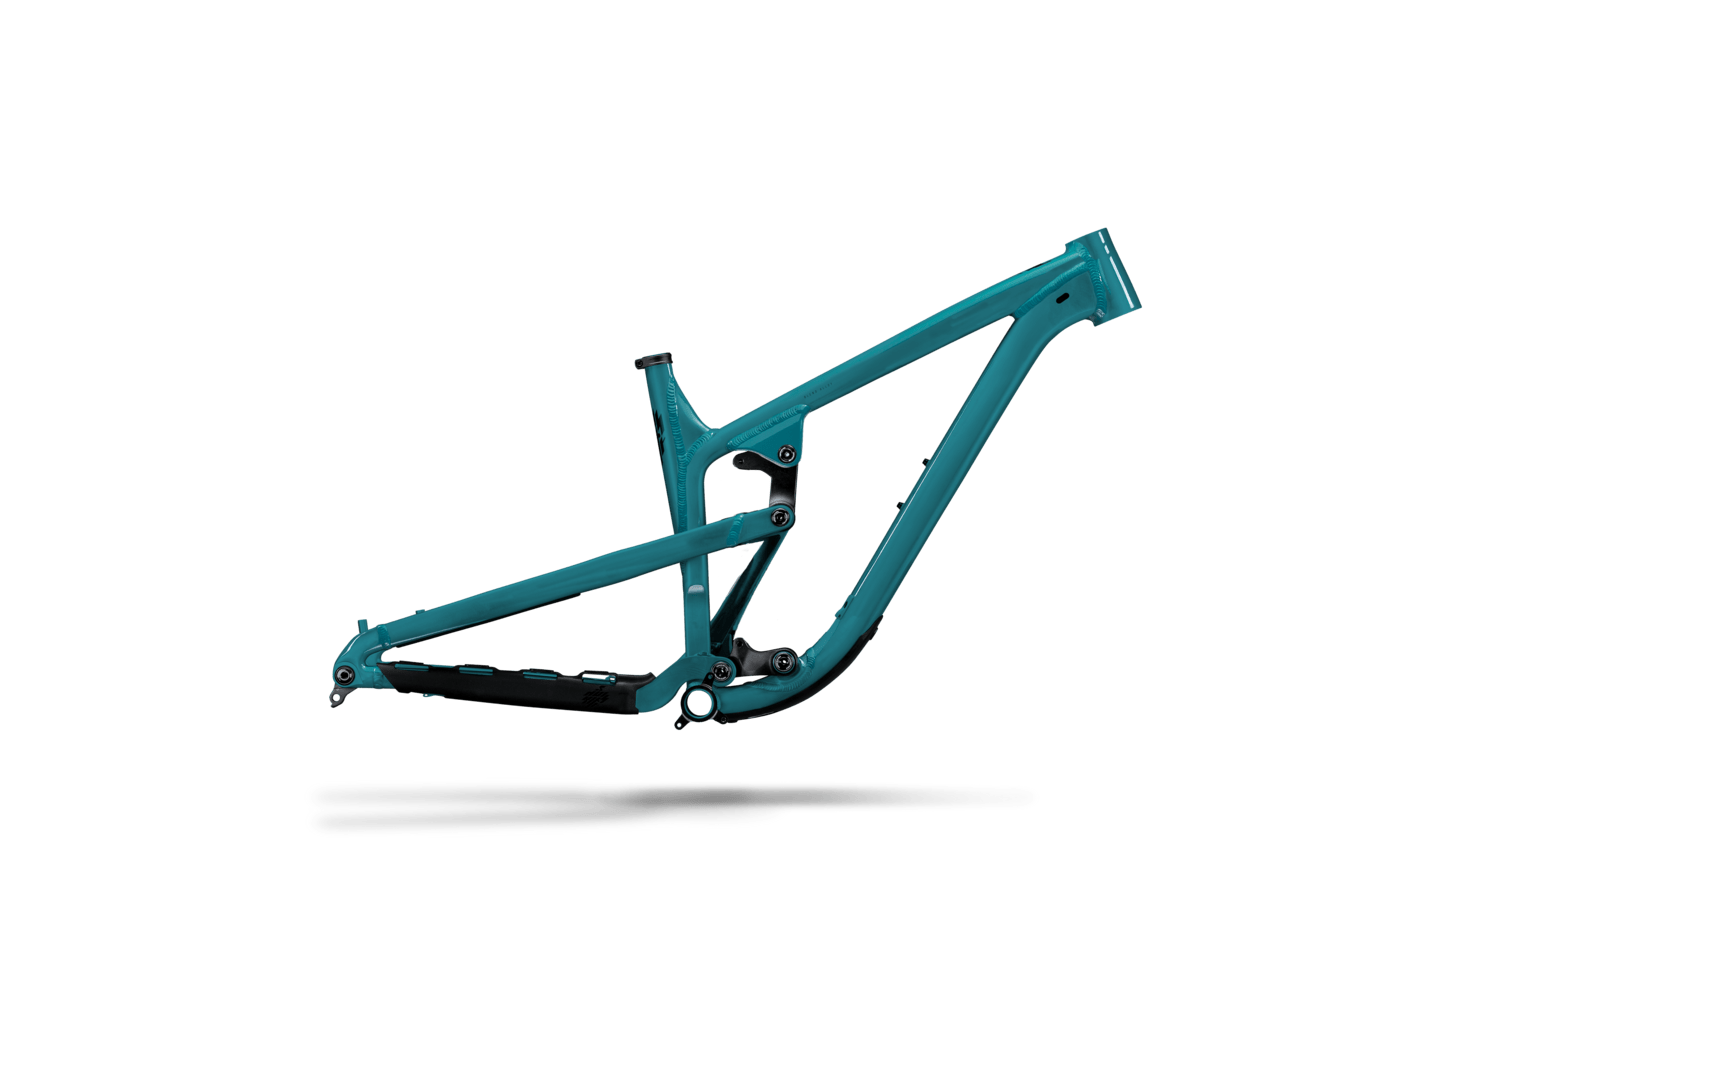 Propain Bike Configurator option image